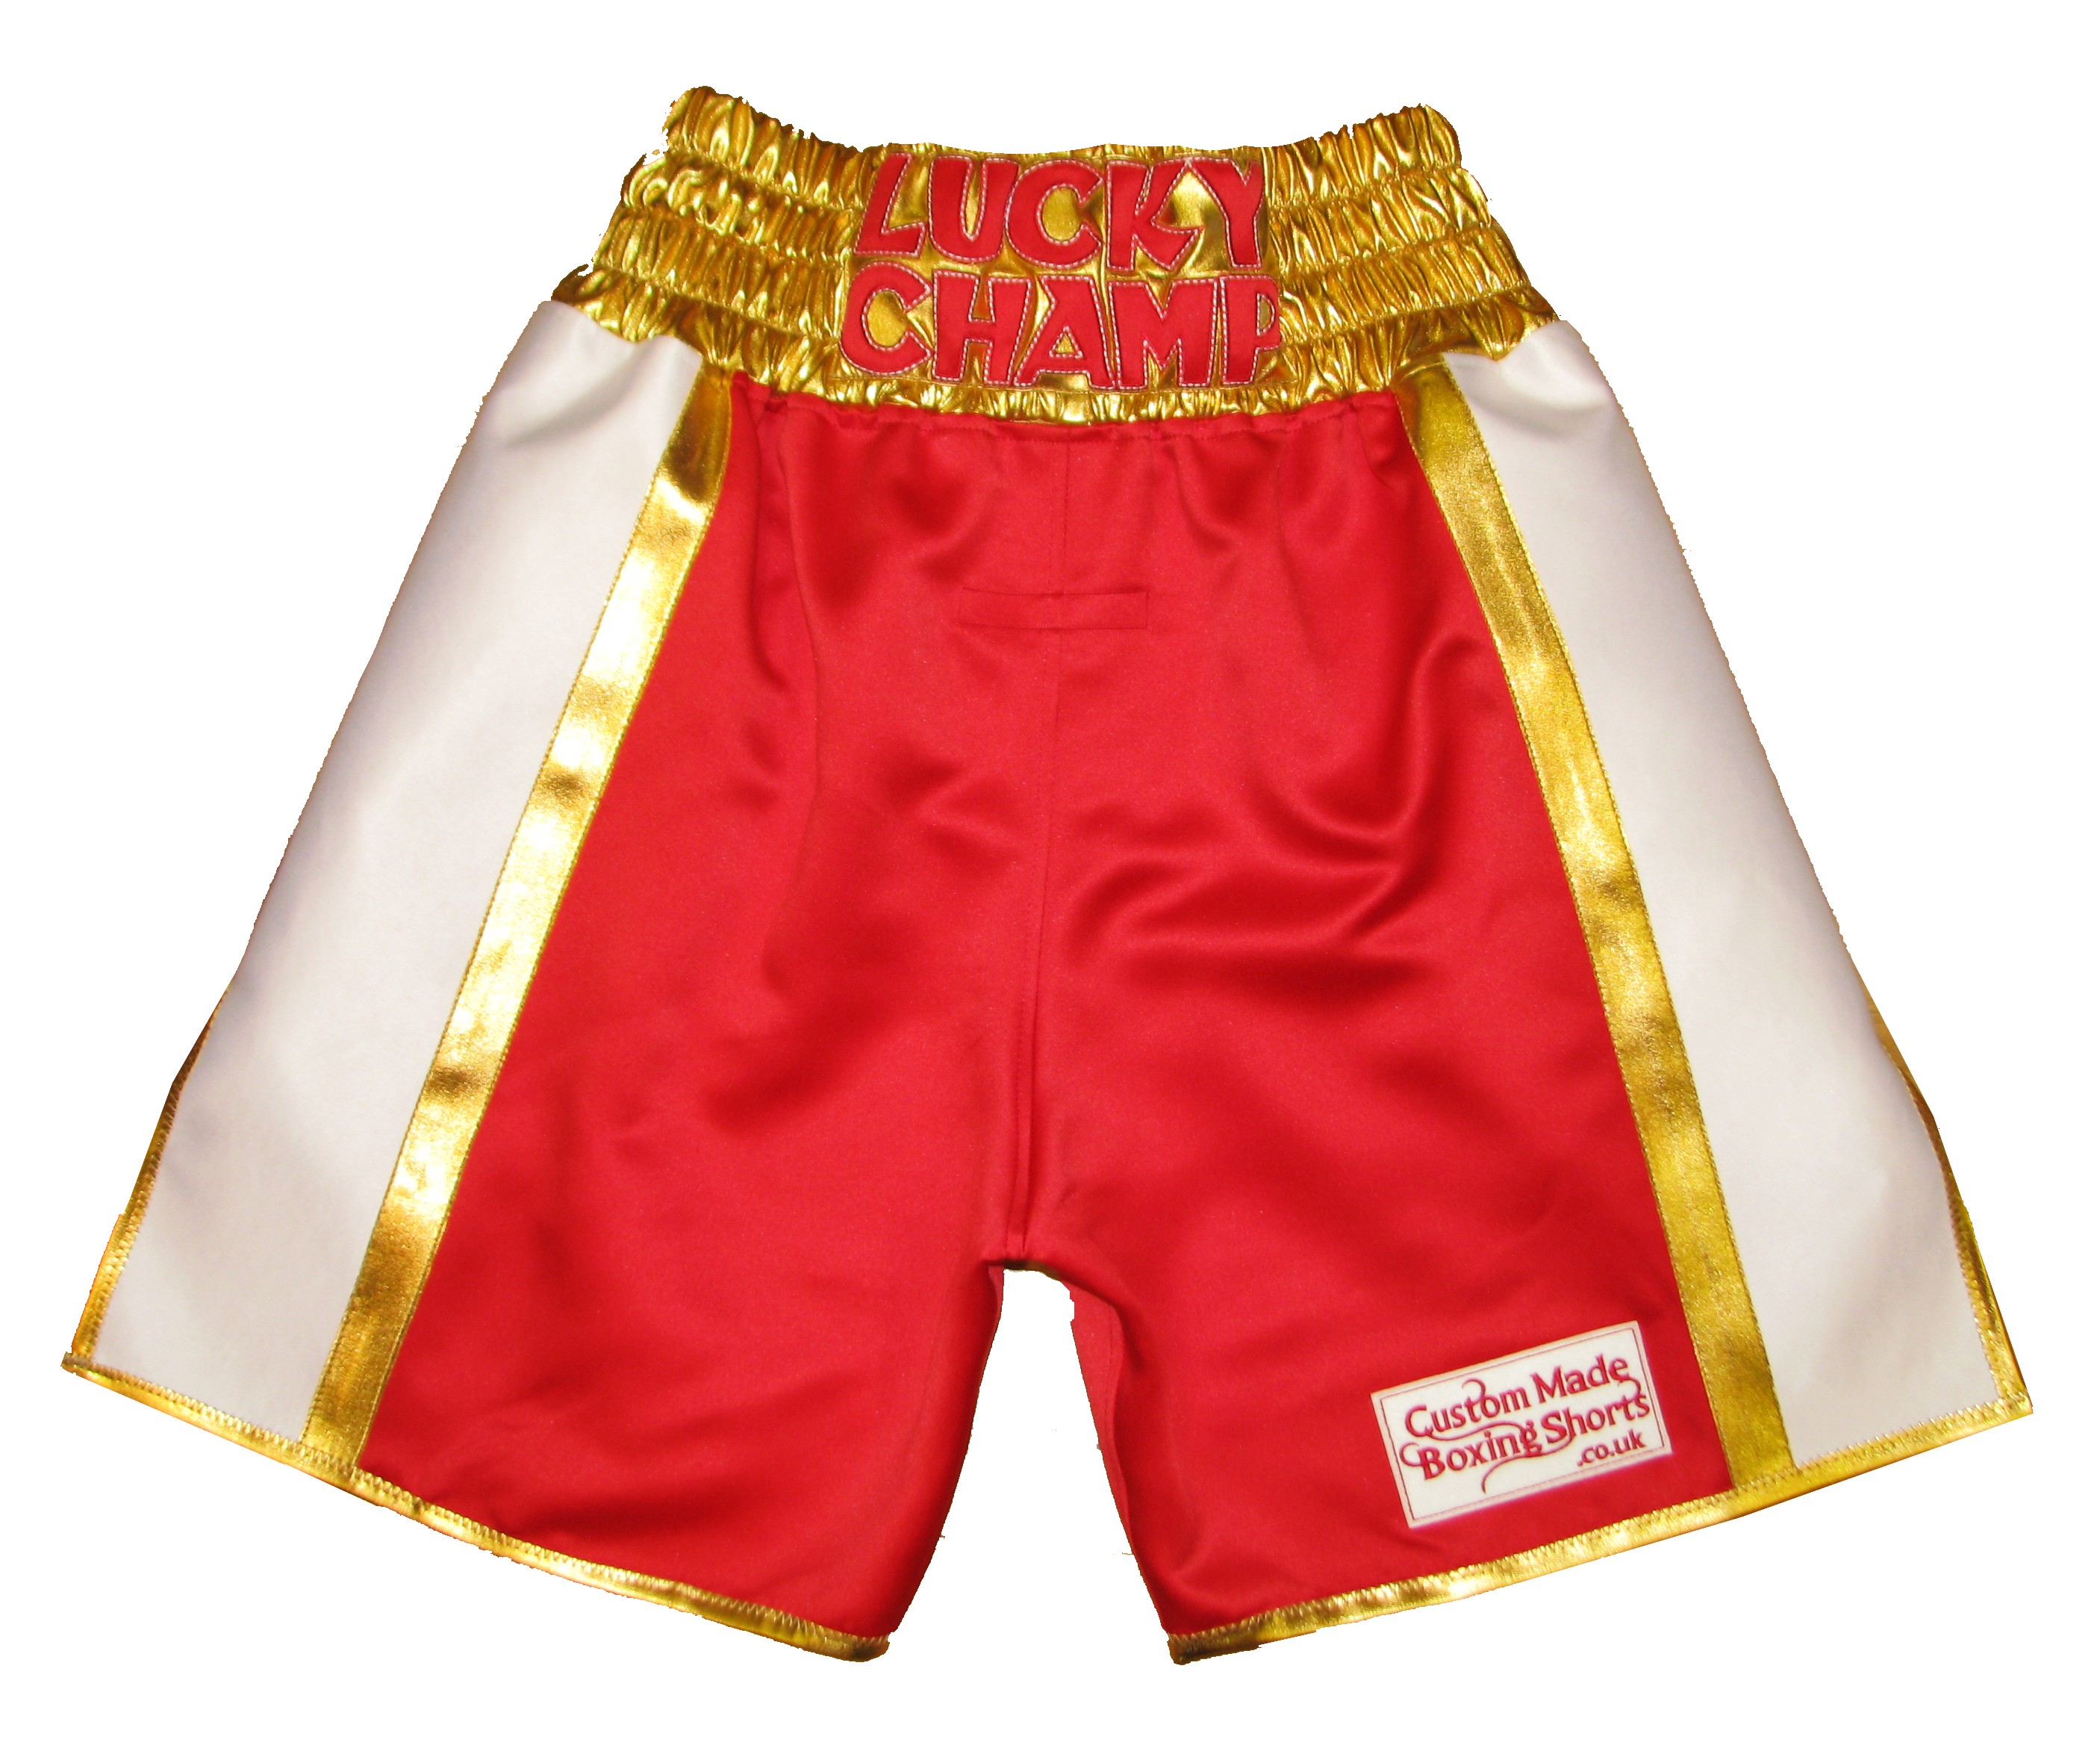 Custom Made Boxing Shorts